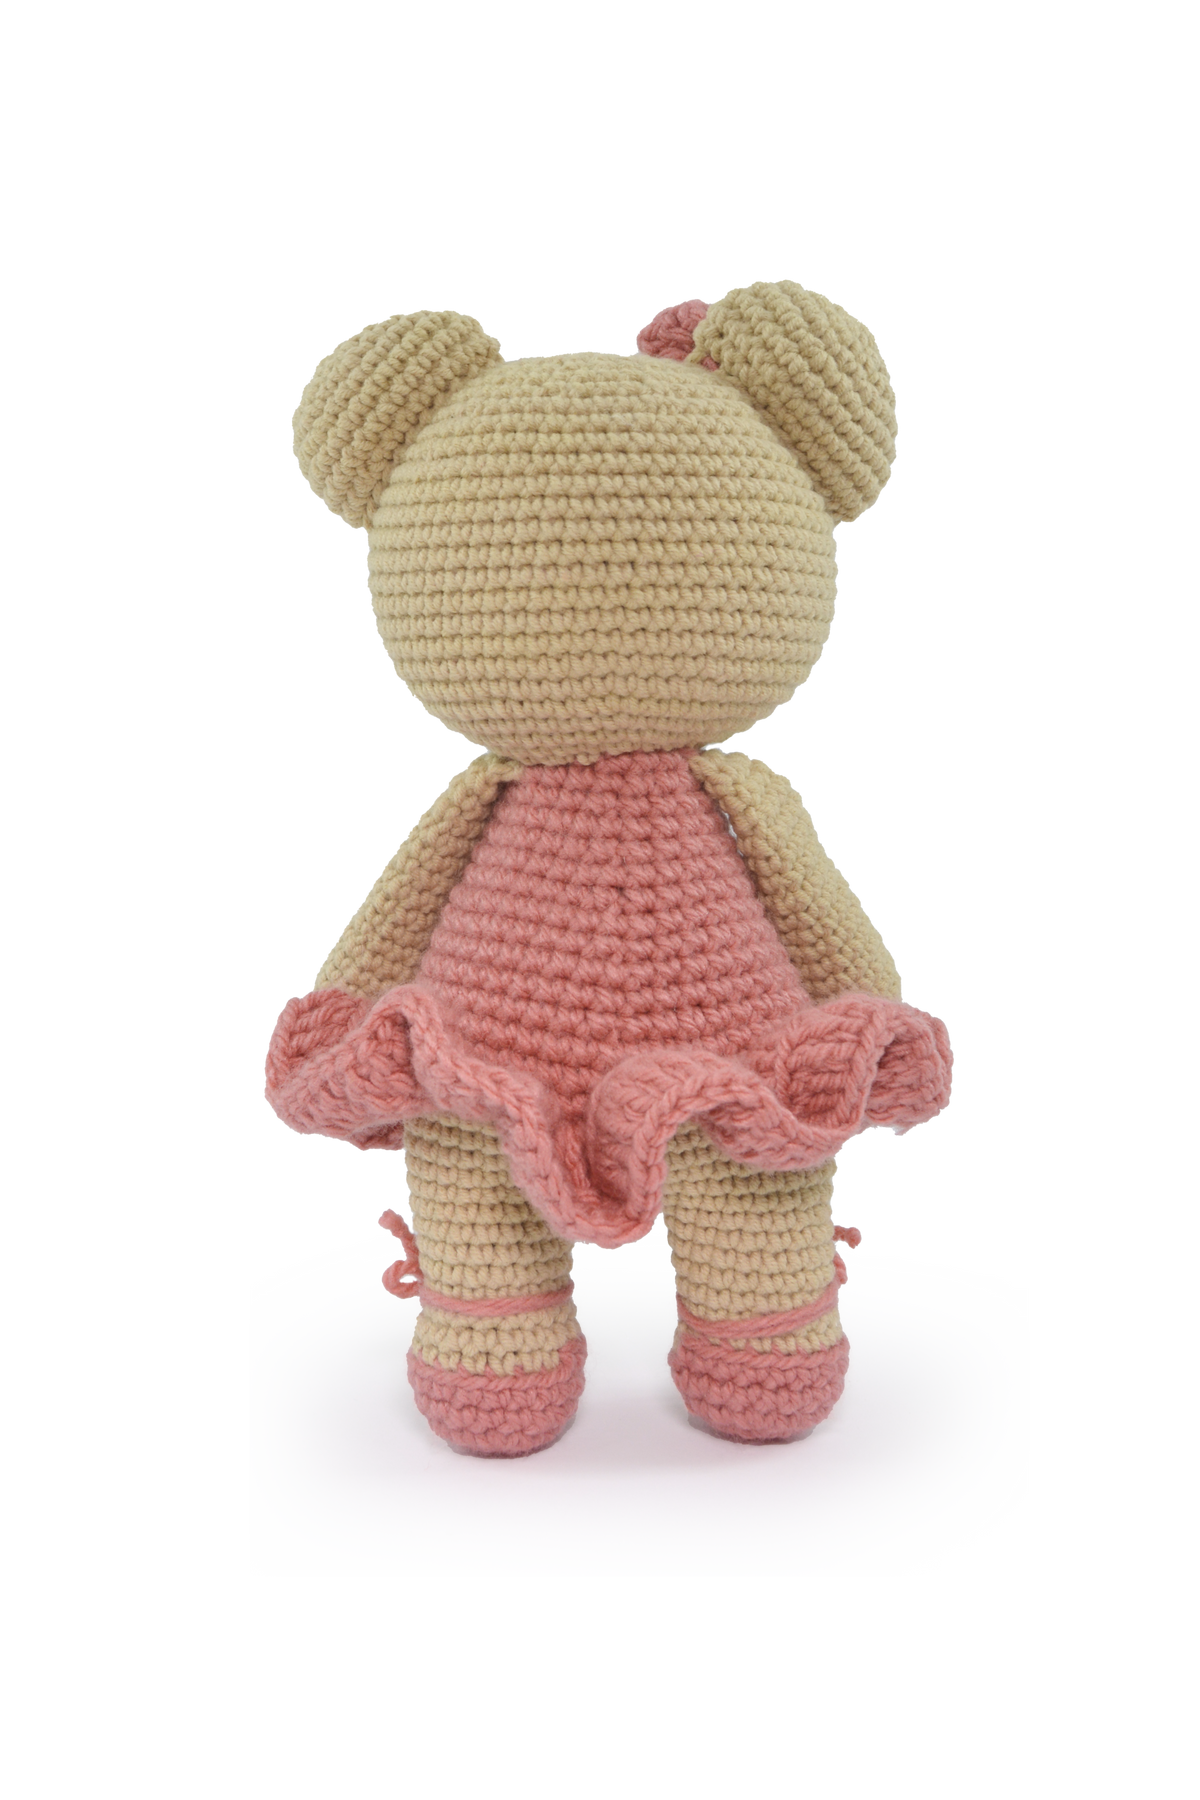 Circulo Amigurumi Cuddly Teddy Bear Kits